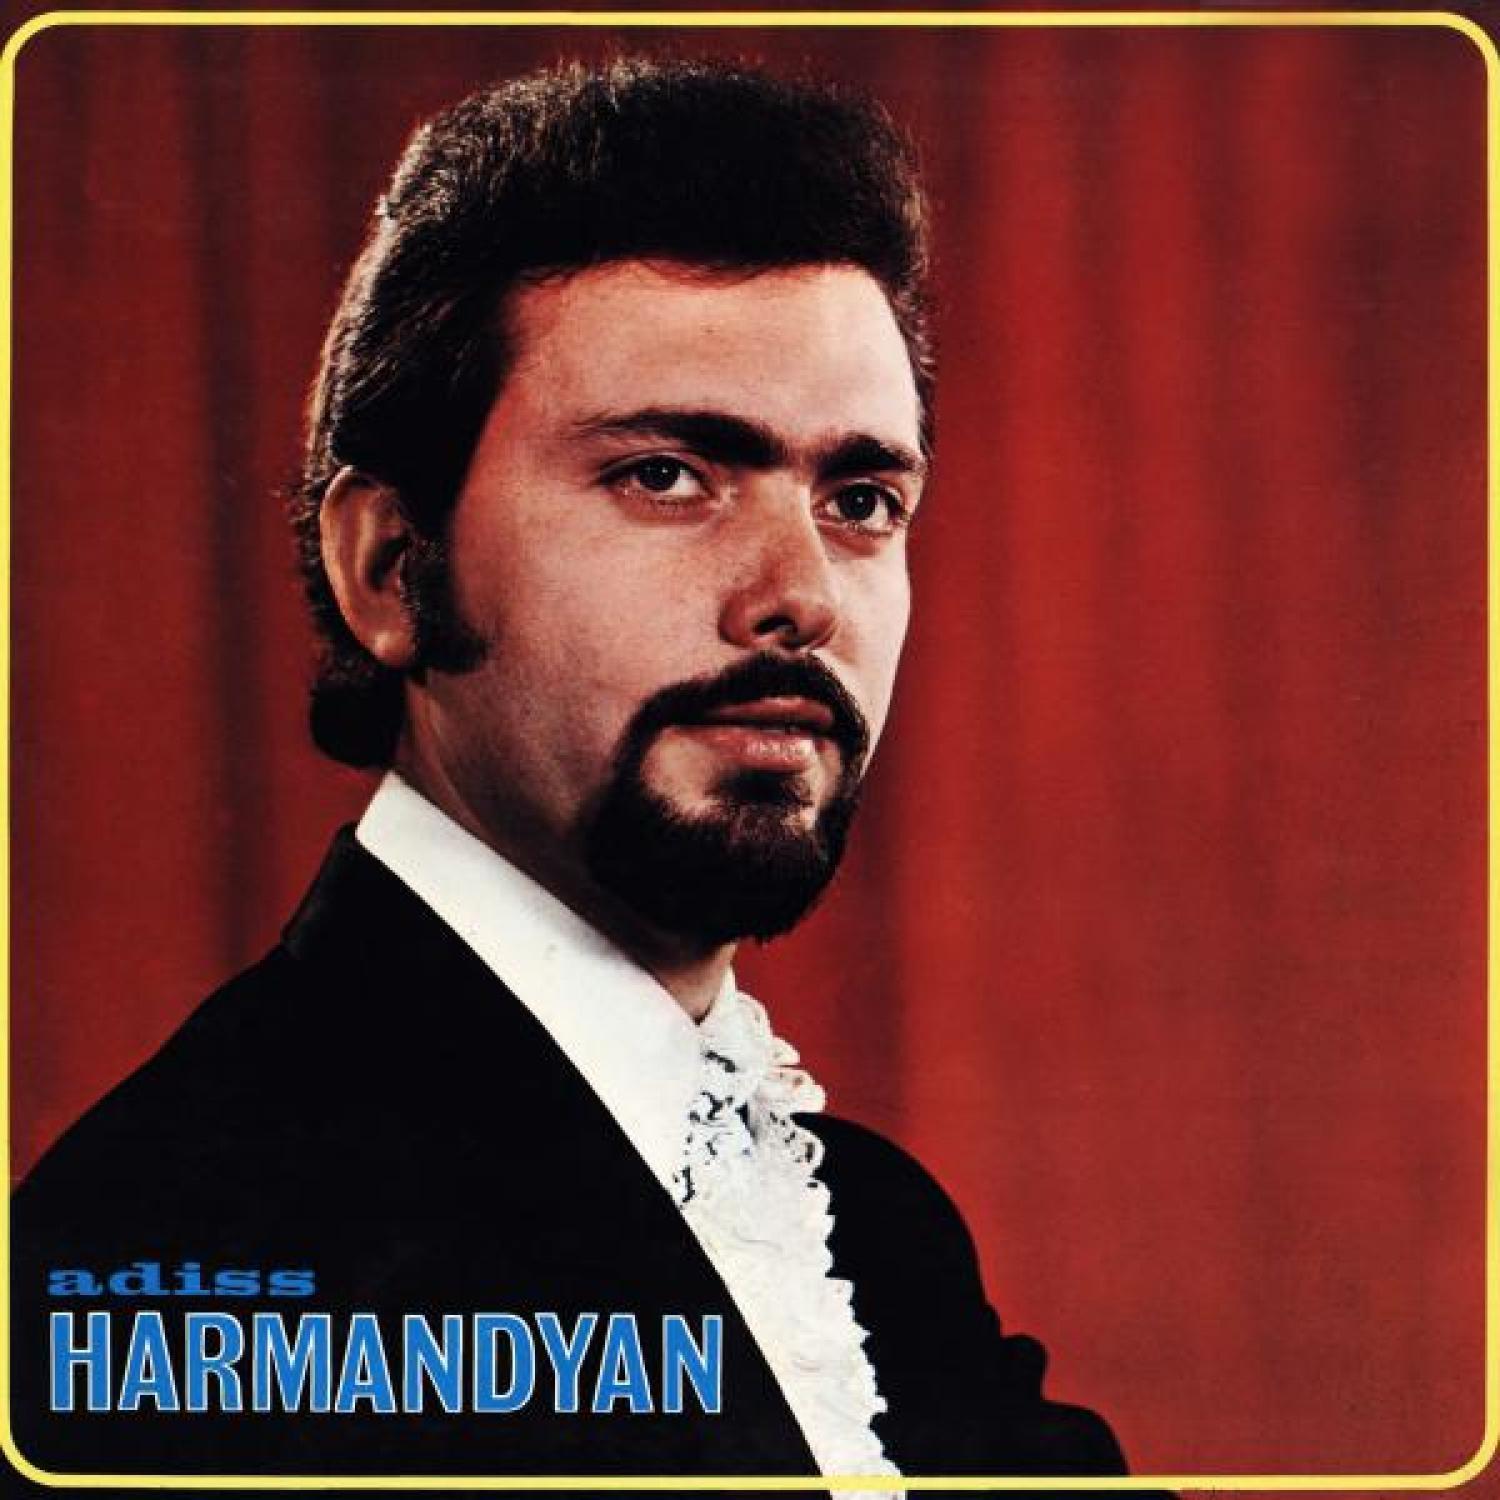 Обложка сольного альбома Адисcа Хармандяна. Voice of stars, 1971